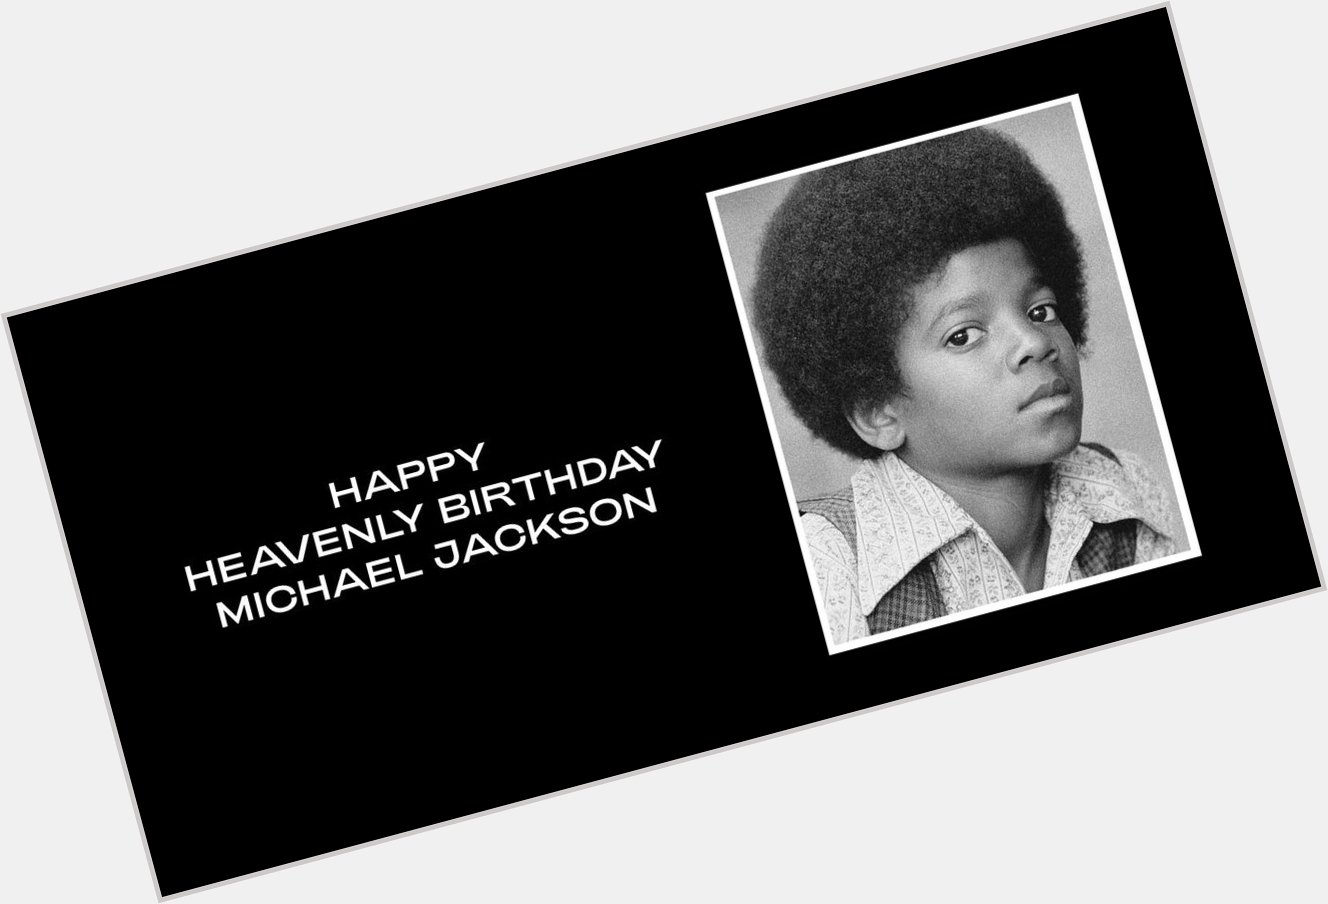  Happy Birthday Michael Jackson & Chris Tucker  